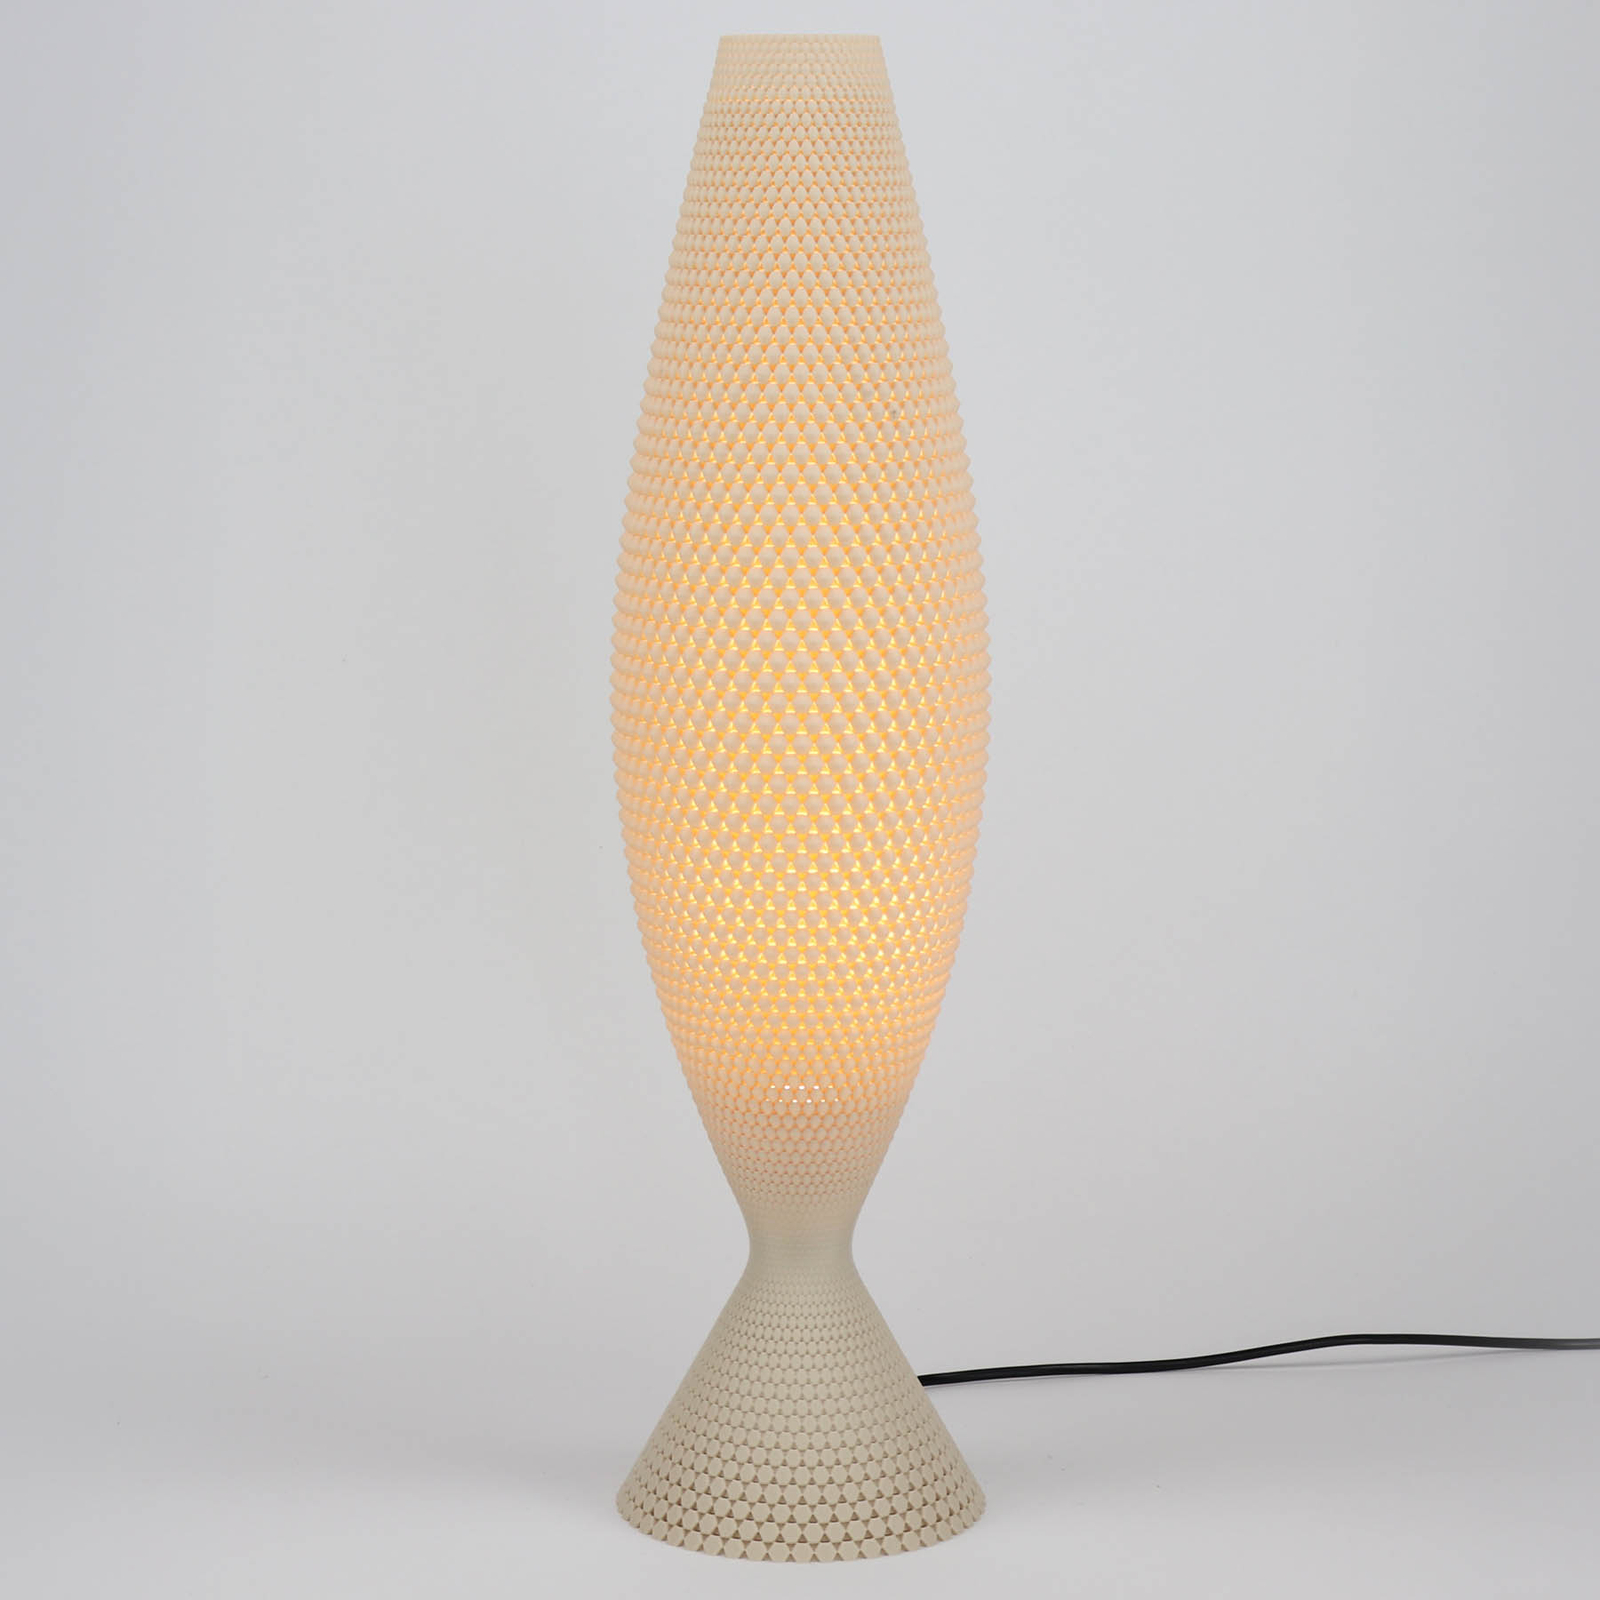 Diamant table lamp made of organic material, Lines, 65 cm